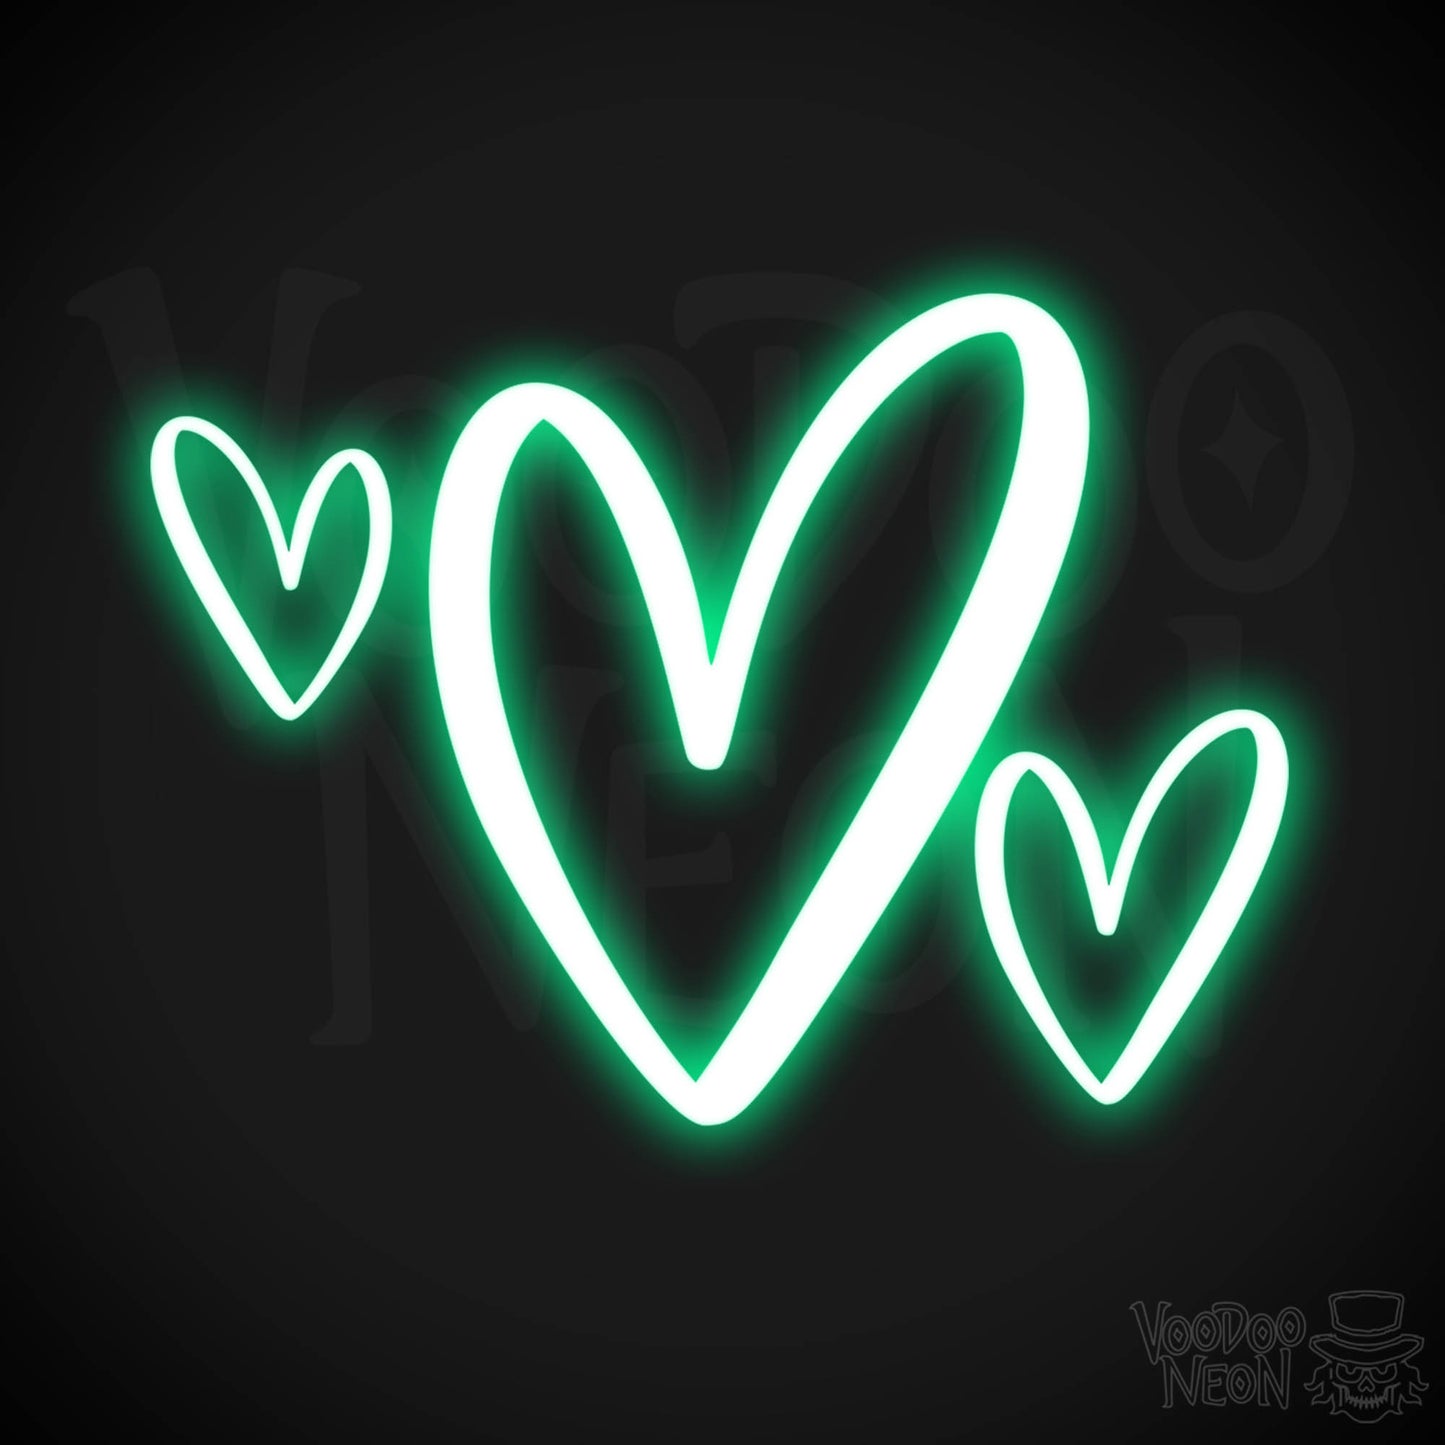 Neon Love Heart - Love Heart Neon Sign - LED Wall Art - Color Green